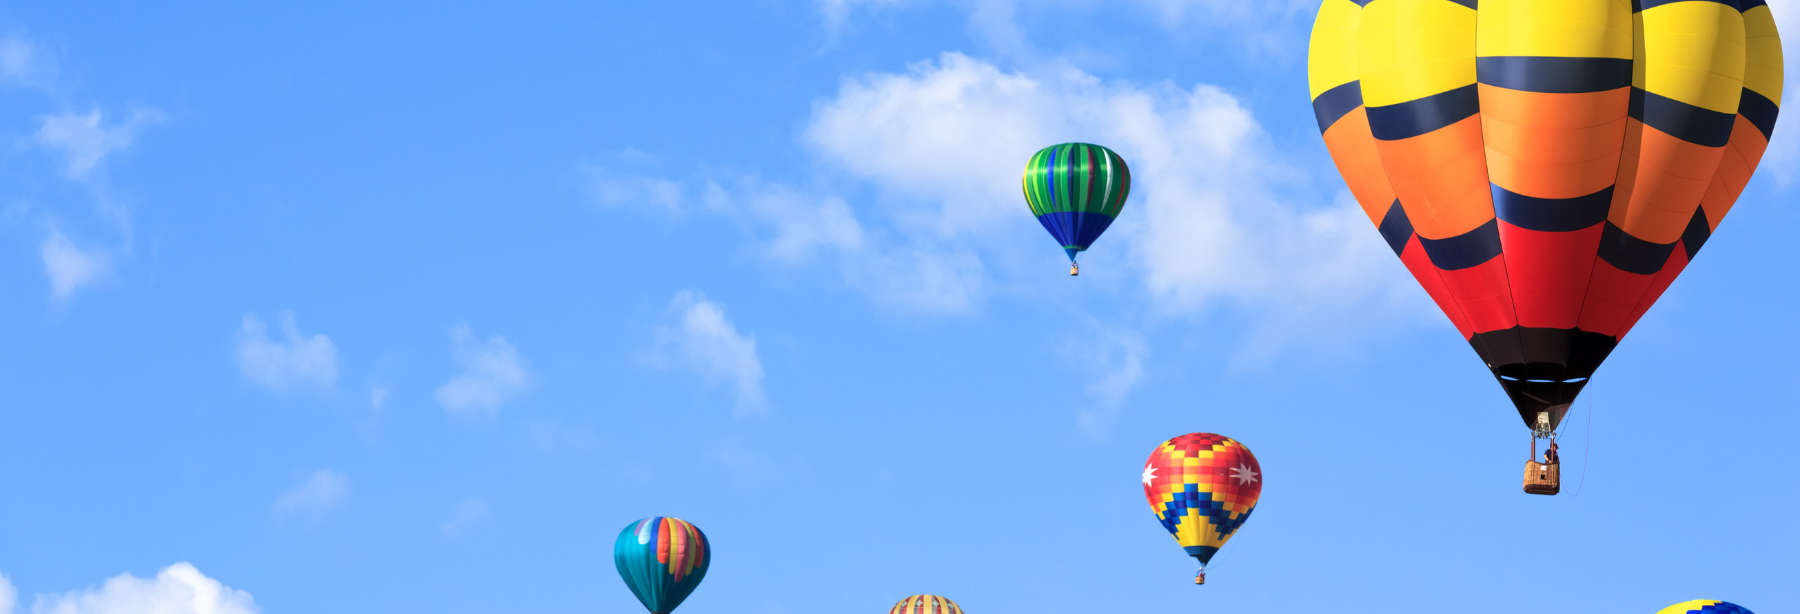 hot air balloons- decorative